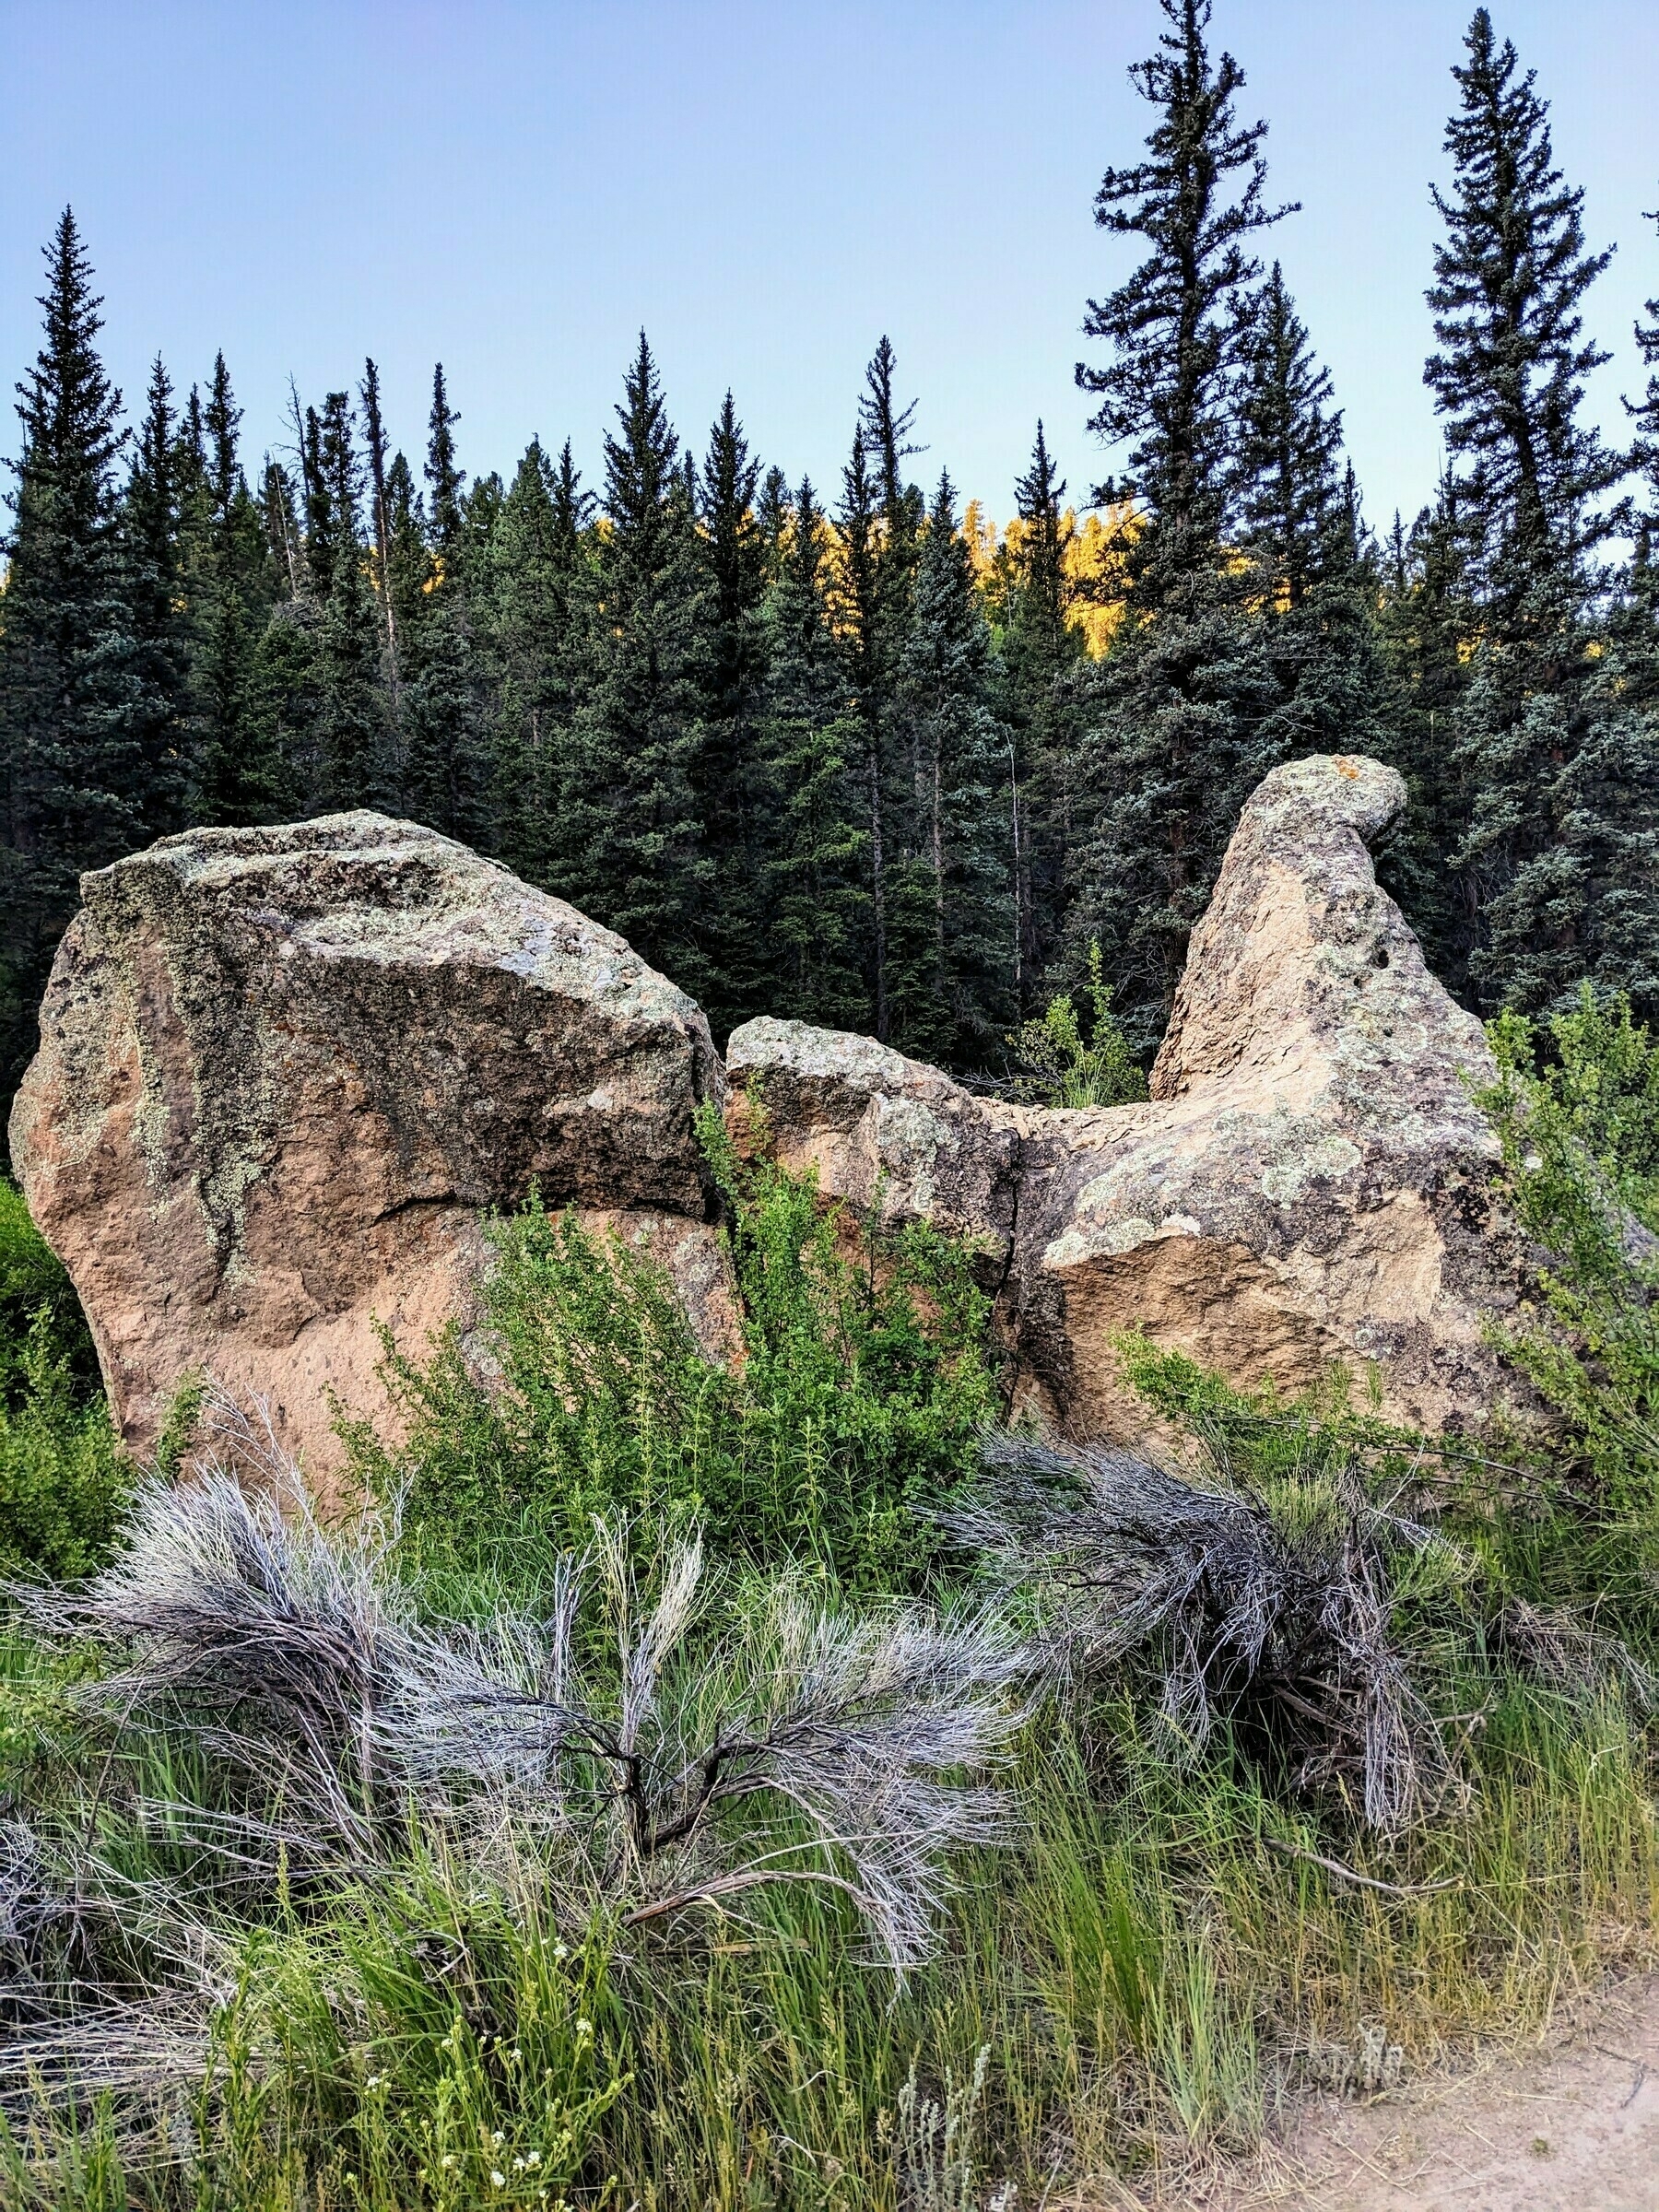 Rocks that look like sculptures by Henry Moore